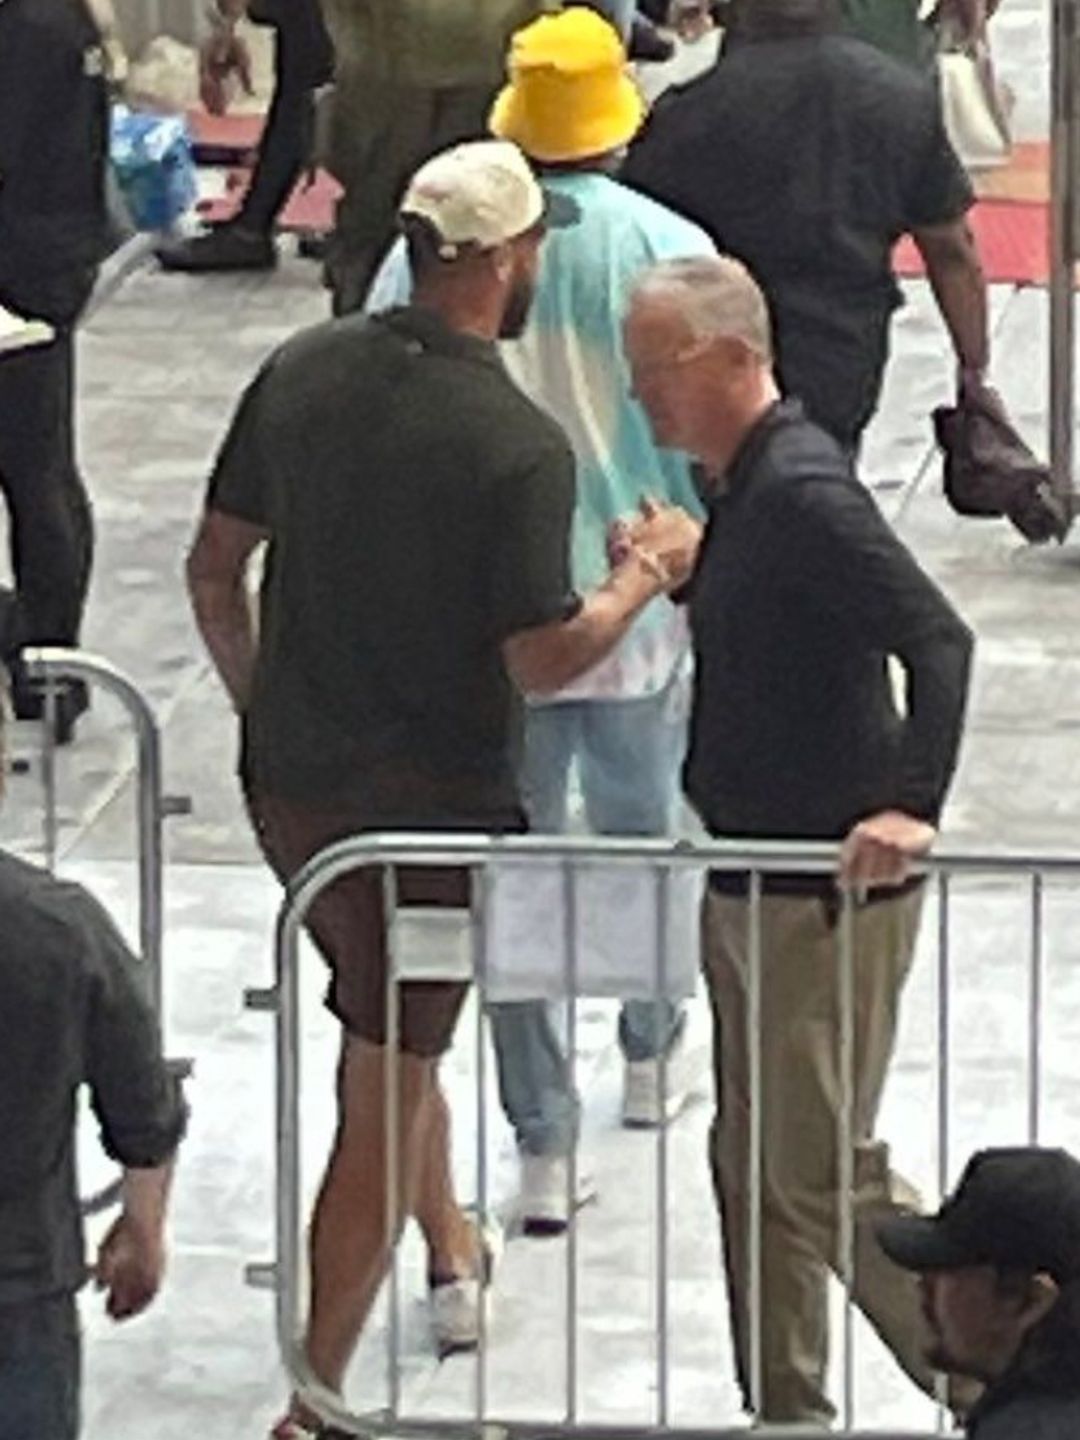 Travis Kelce walks past security guards